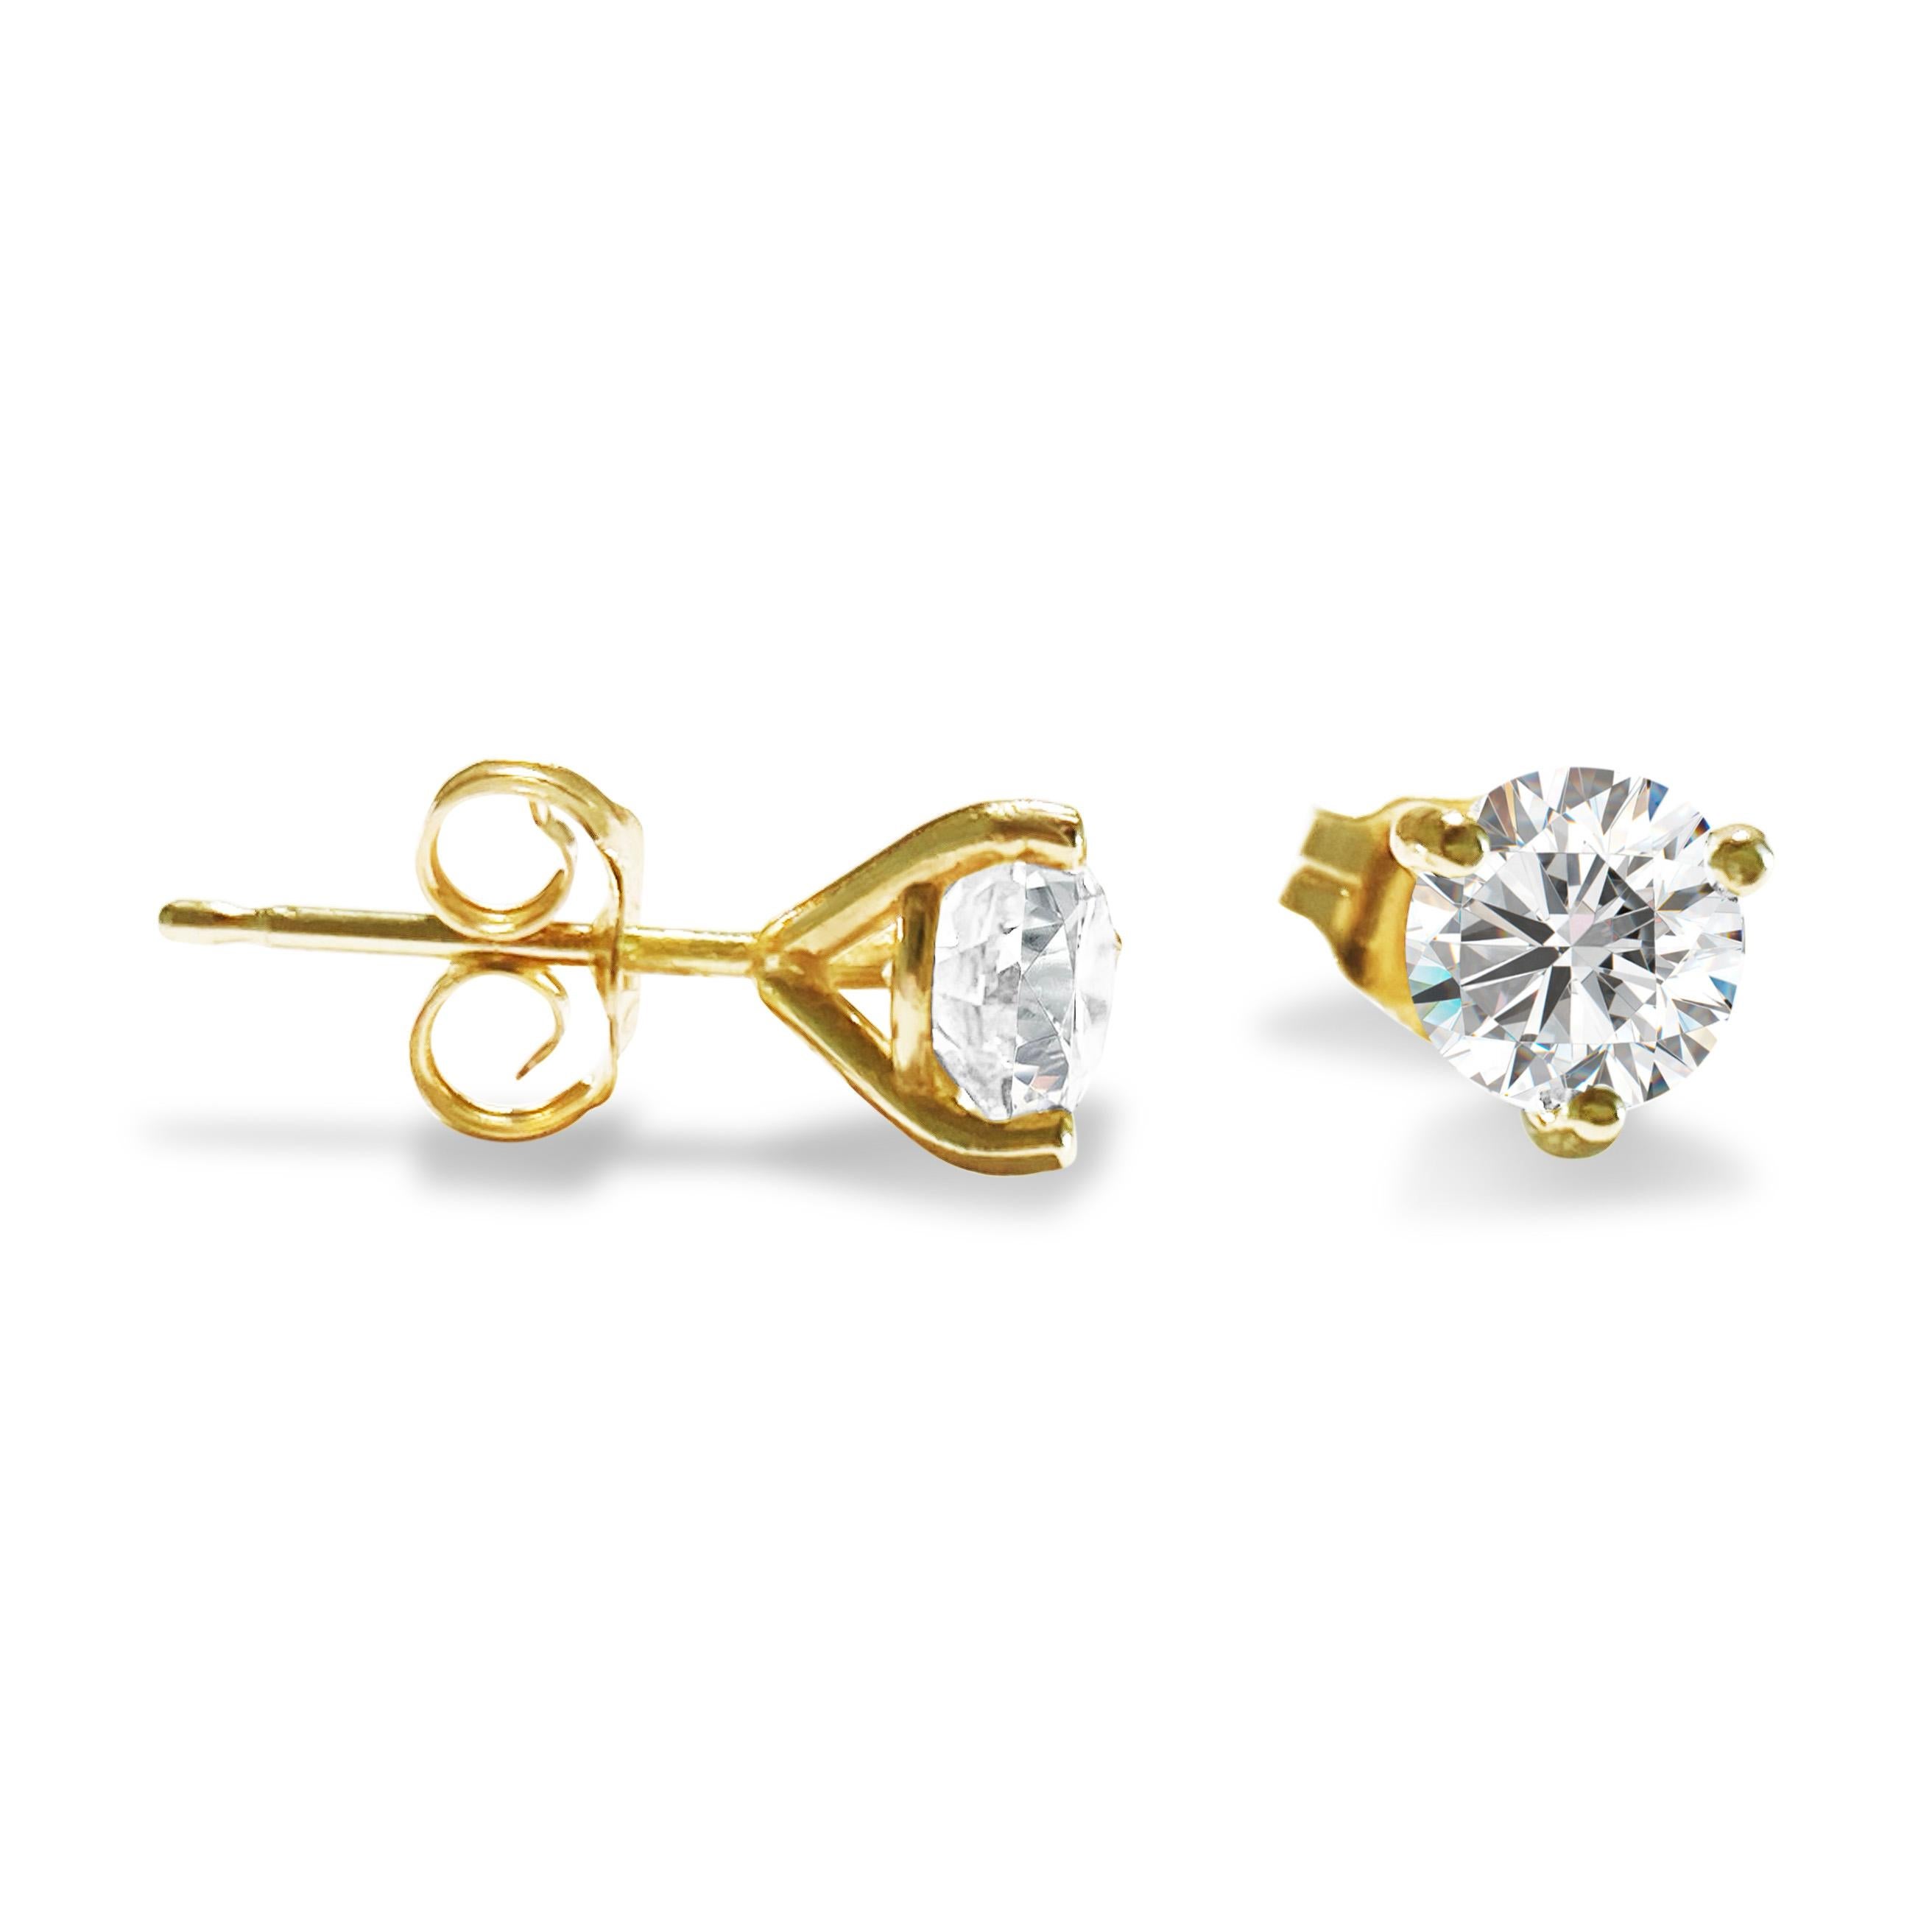 1 carat vvs diamond stud earrings